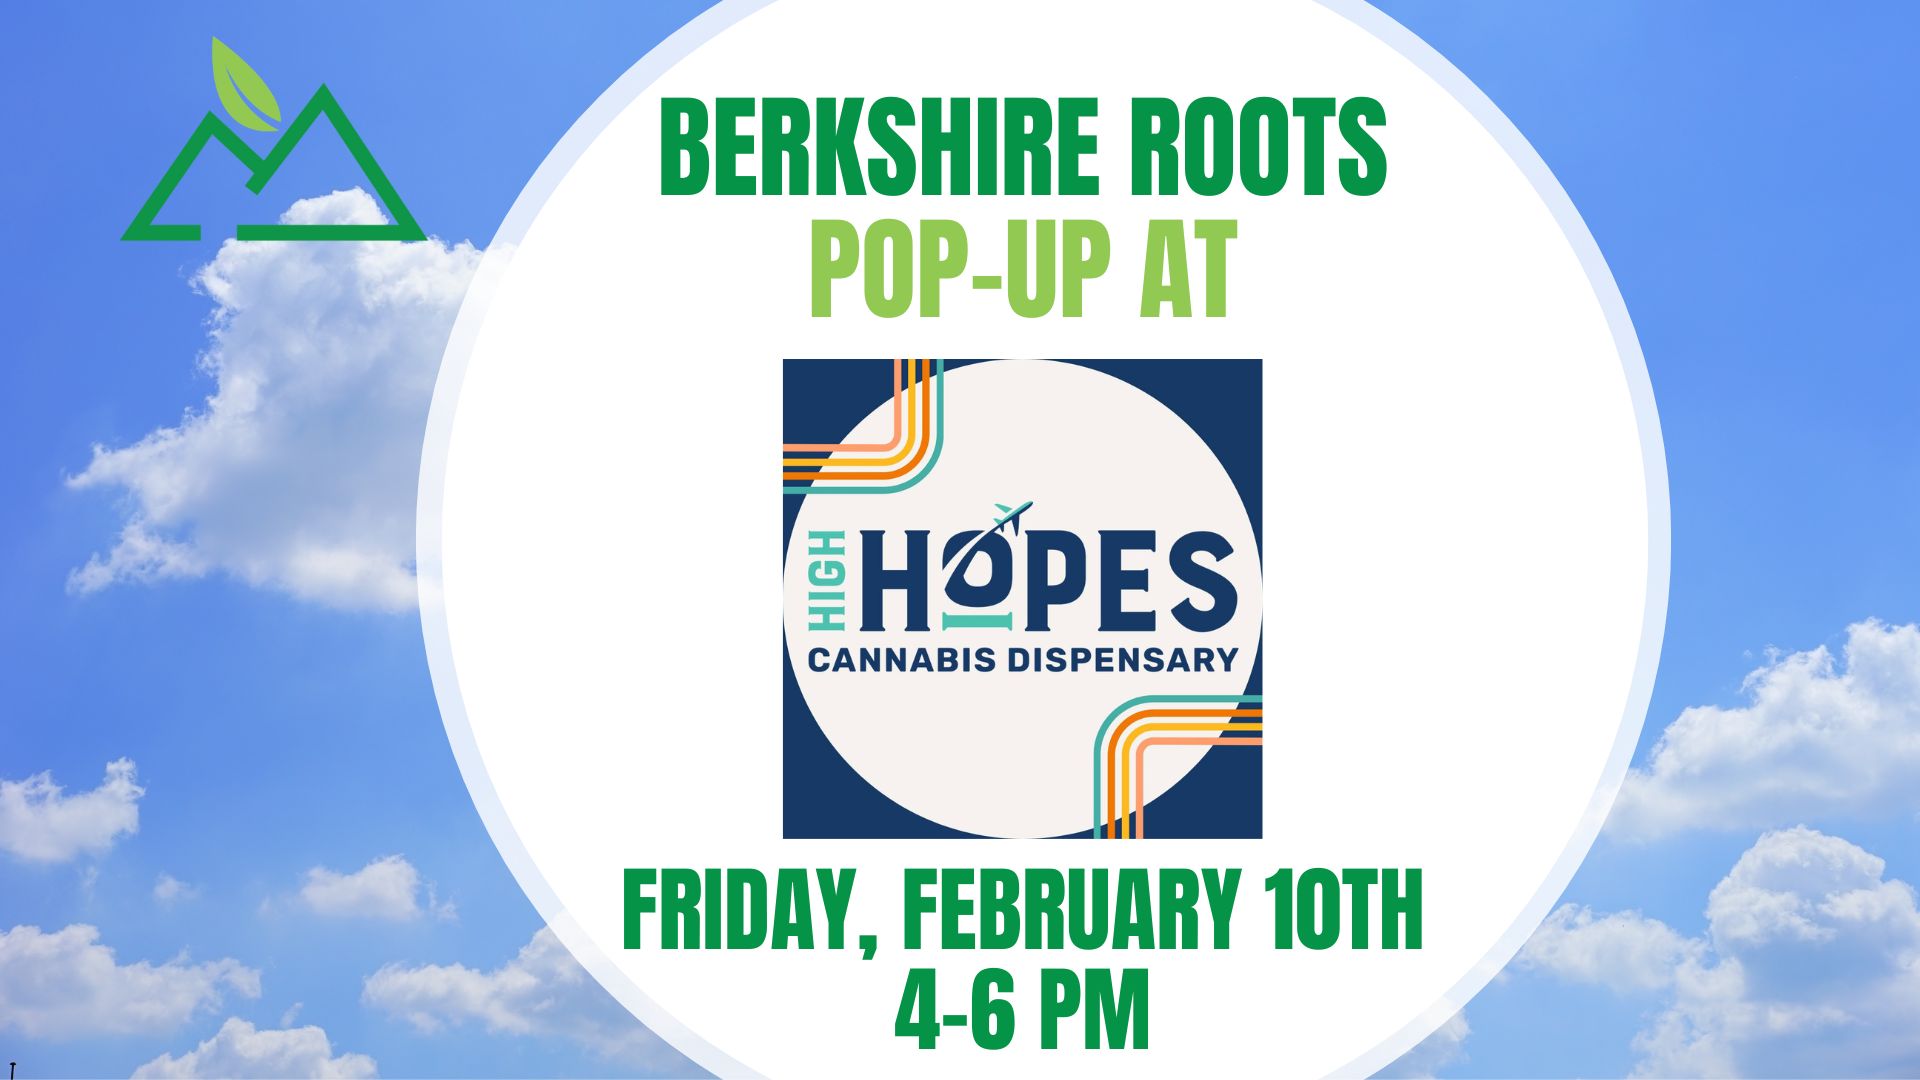 Berkshire Roots Pop up at High Hopes Cannabis